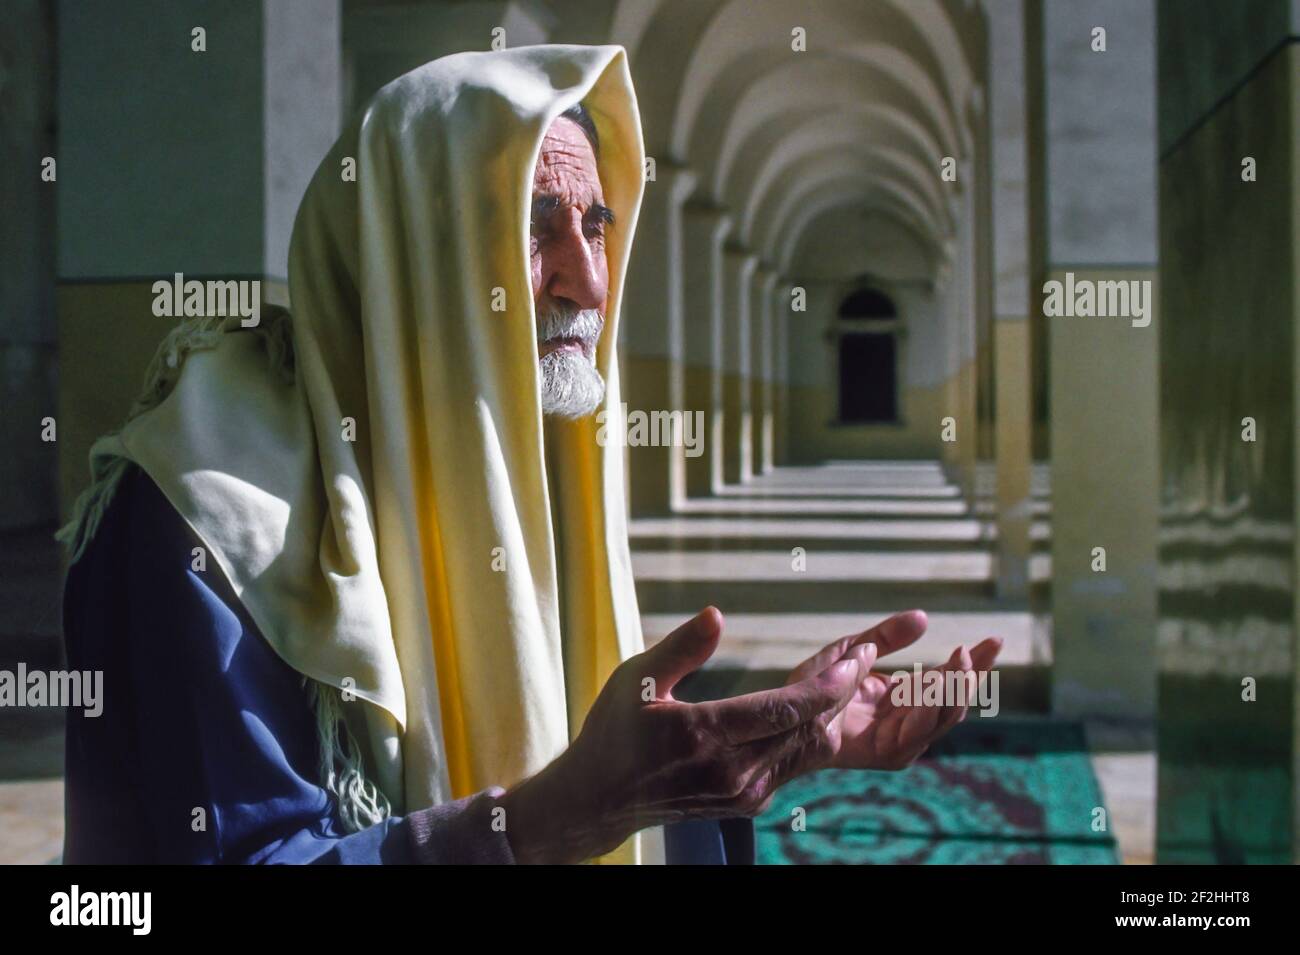 Elderly man in prayer Grand mosque Damascus Syria Stock Photo